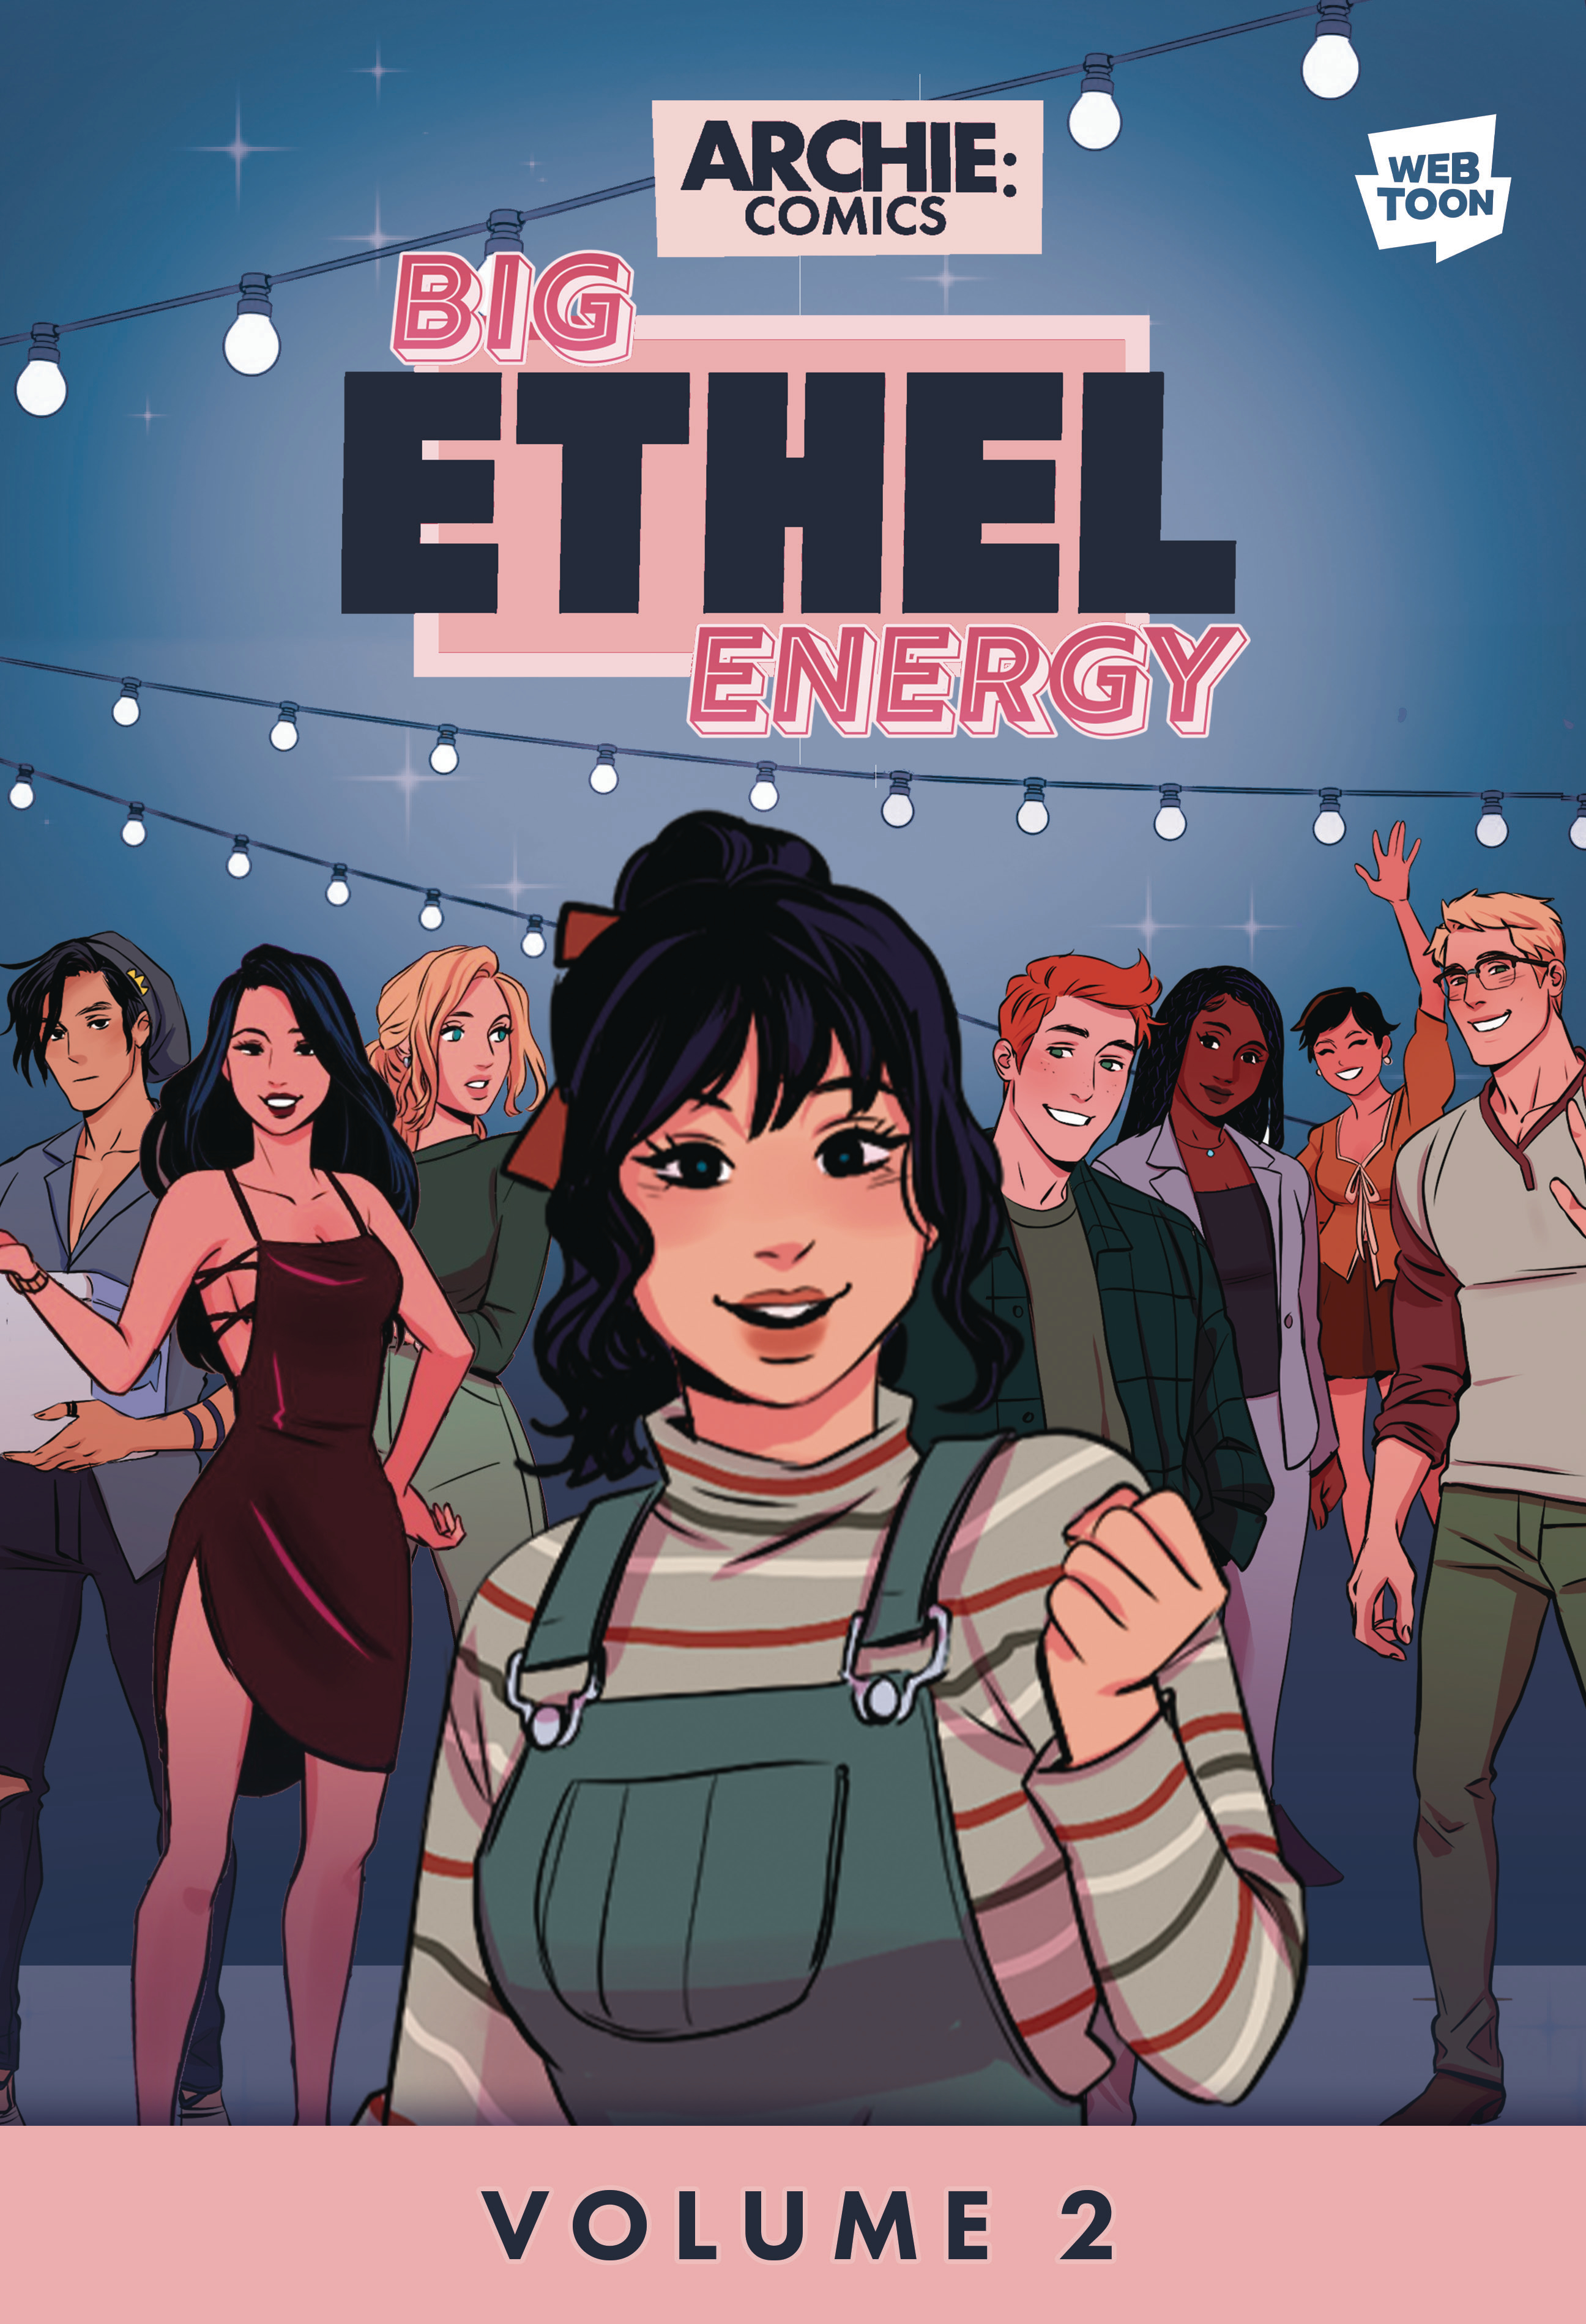 Big Ethel Energy Graphic Novel Volume 2